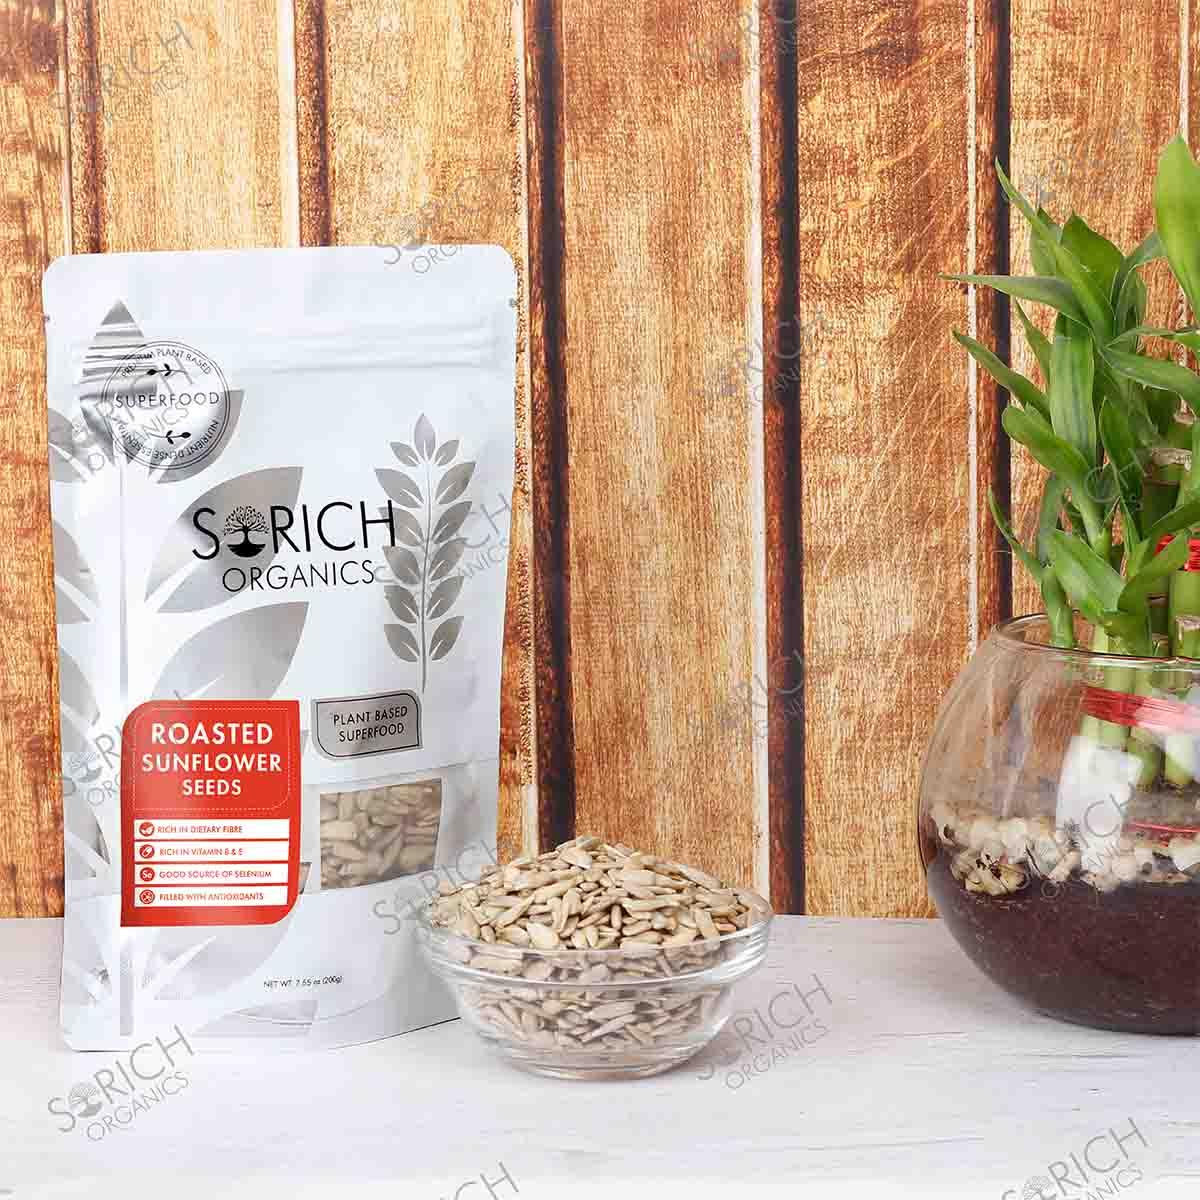 sorich organics roasted sunflower seeds